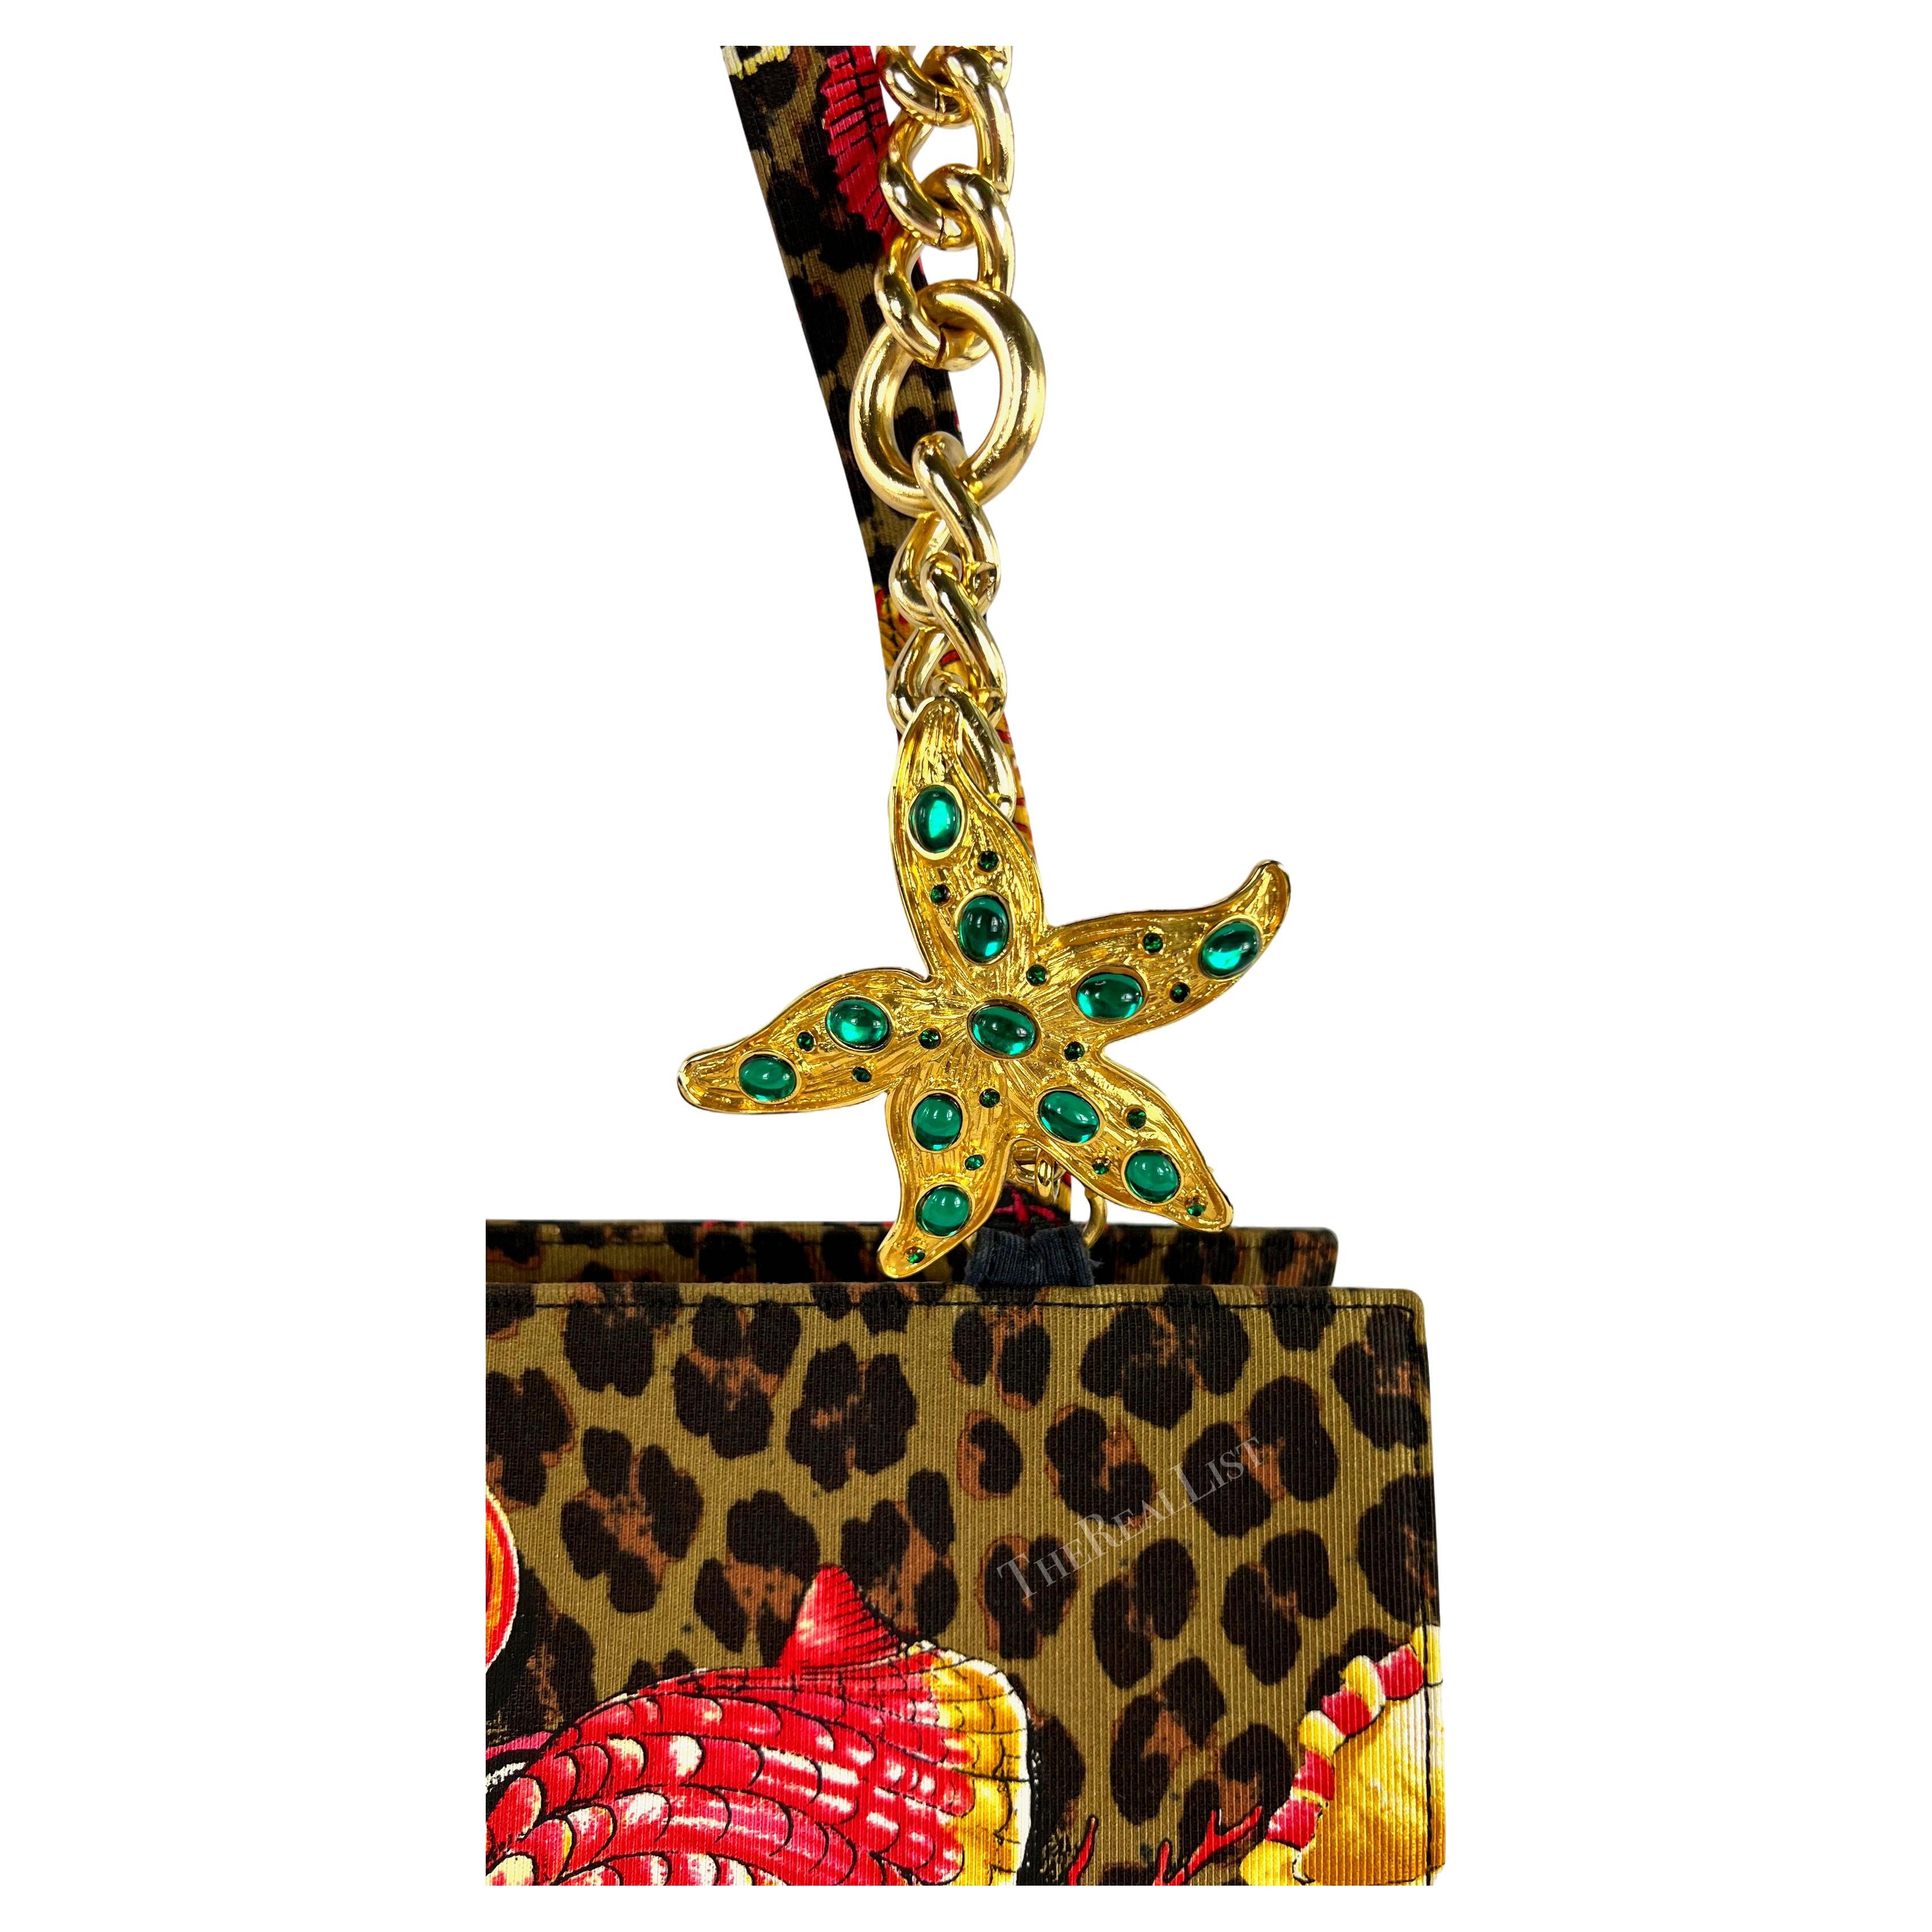 S/S 1992 Gianni Versace Runway Rhinestone Gold Shell Jewel Chain Crossbody Bag  For Sale 1